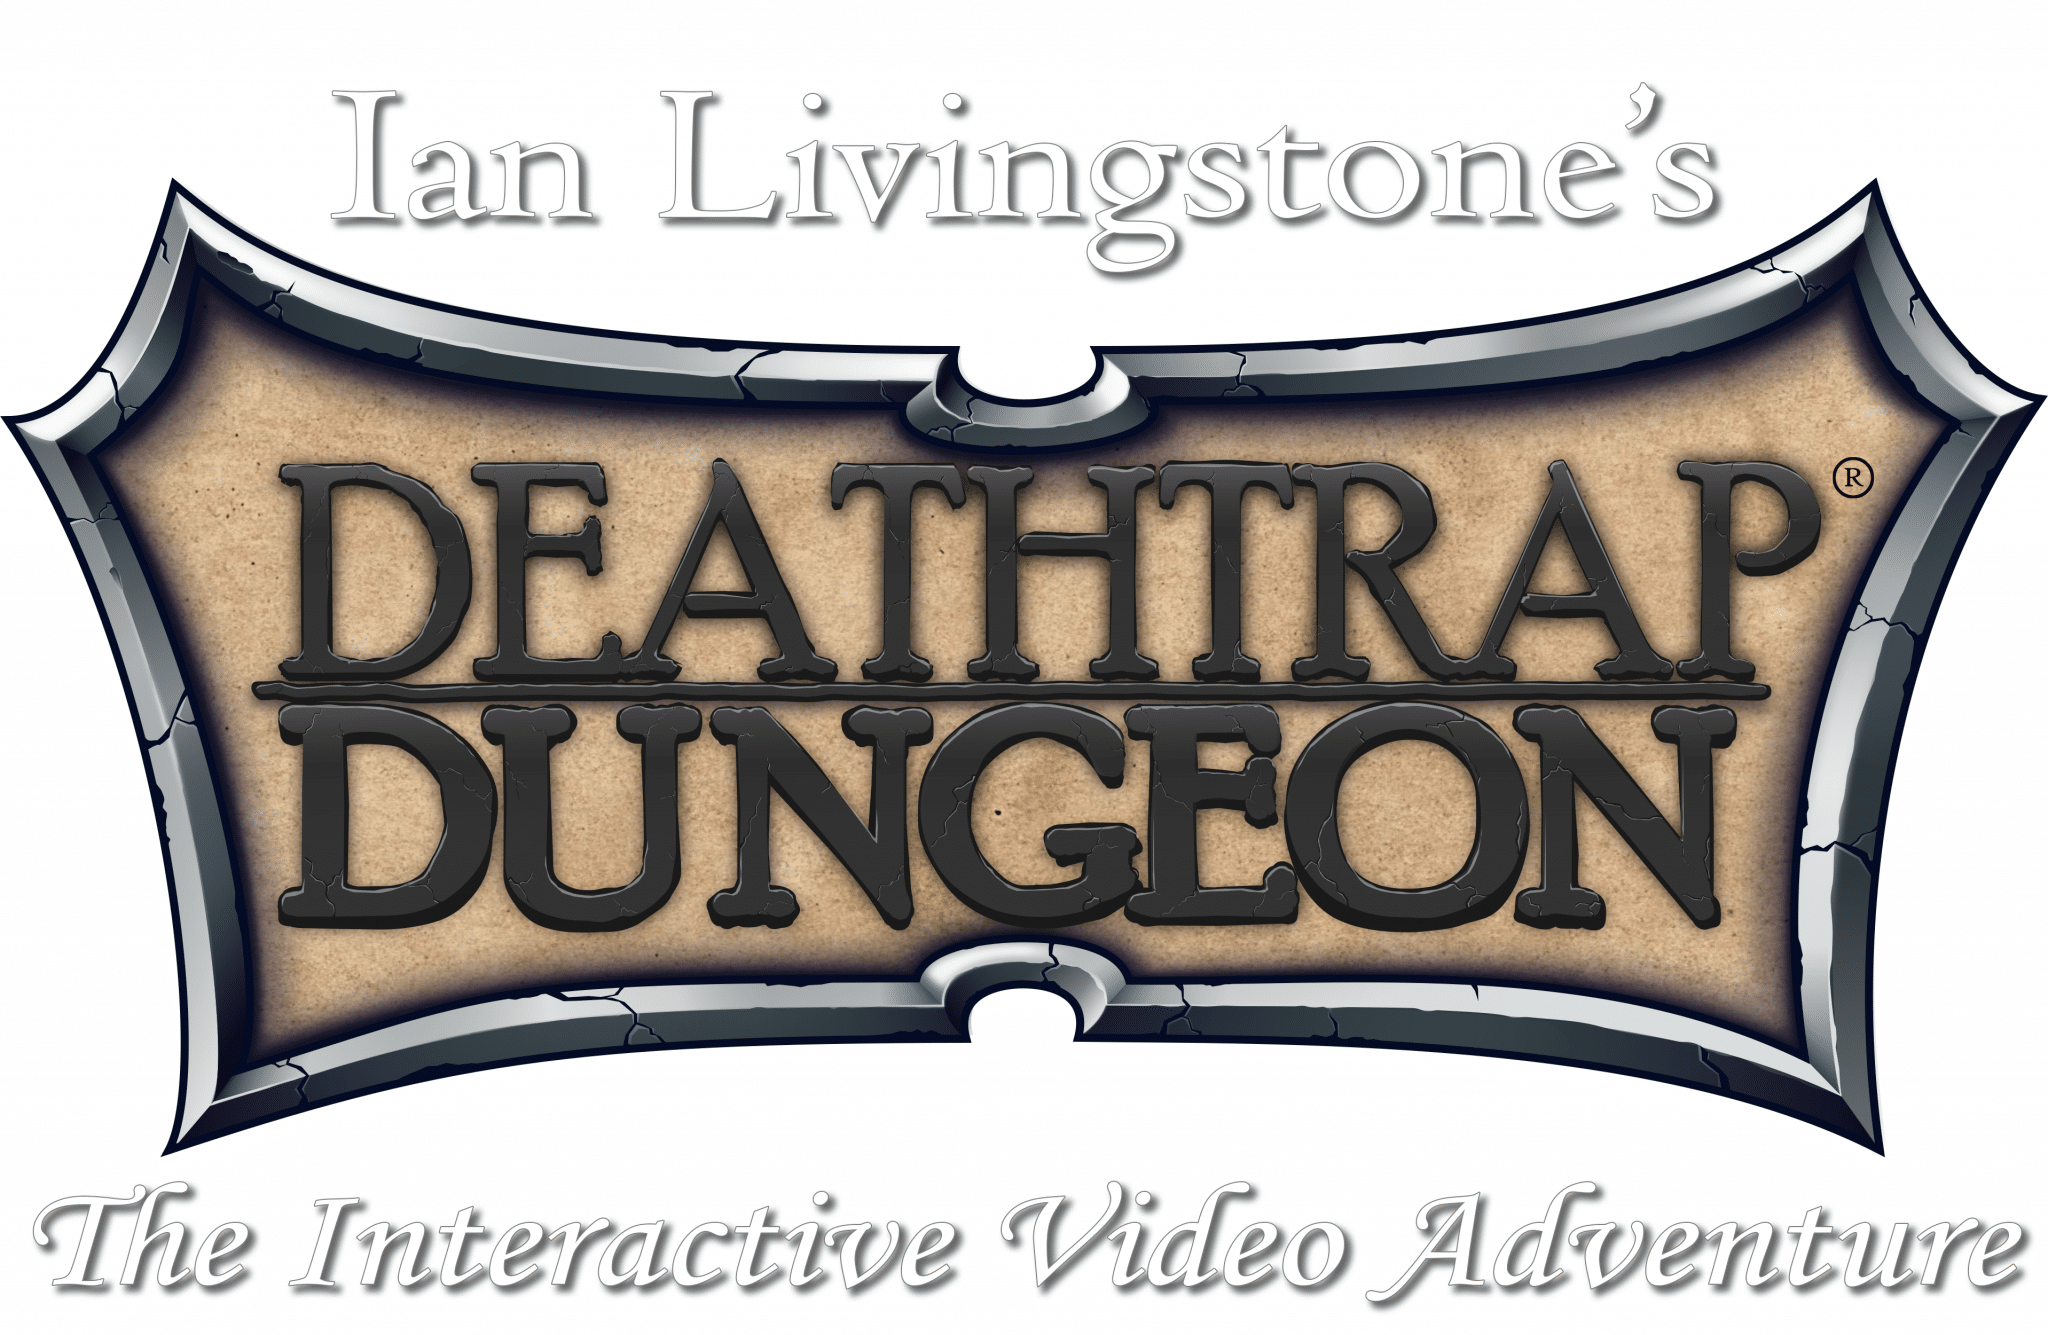 Deathtrap Dungeon The Interactive Video Adventure logo